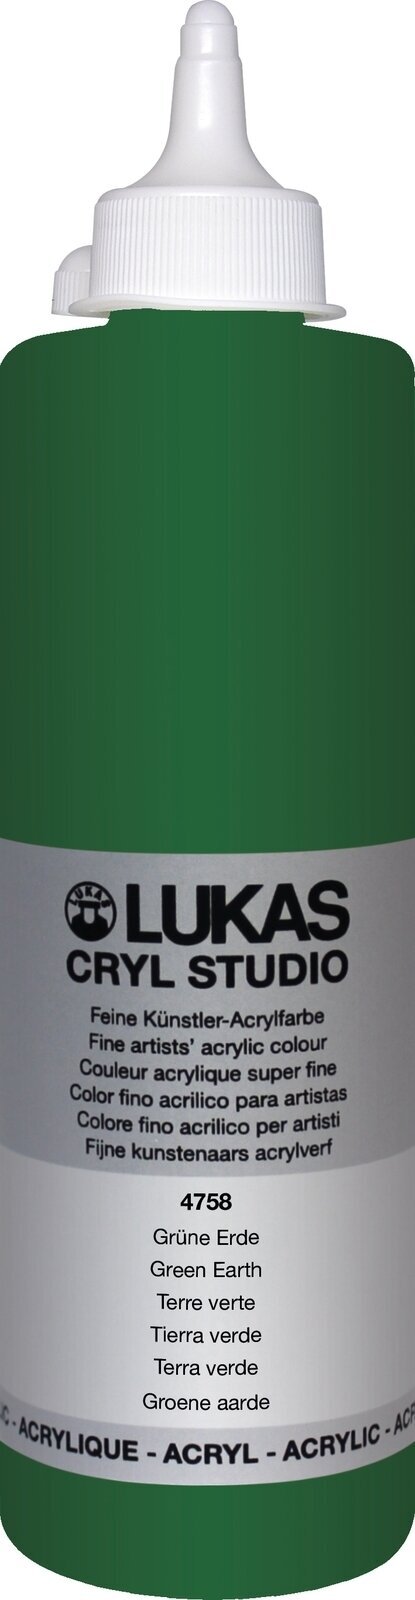 Acrylic Paint Lukas Cryl Studio Acrylic Paint 500 ml Green Earth